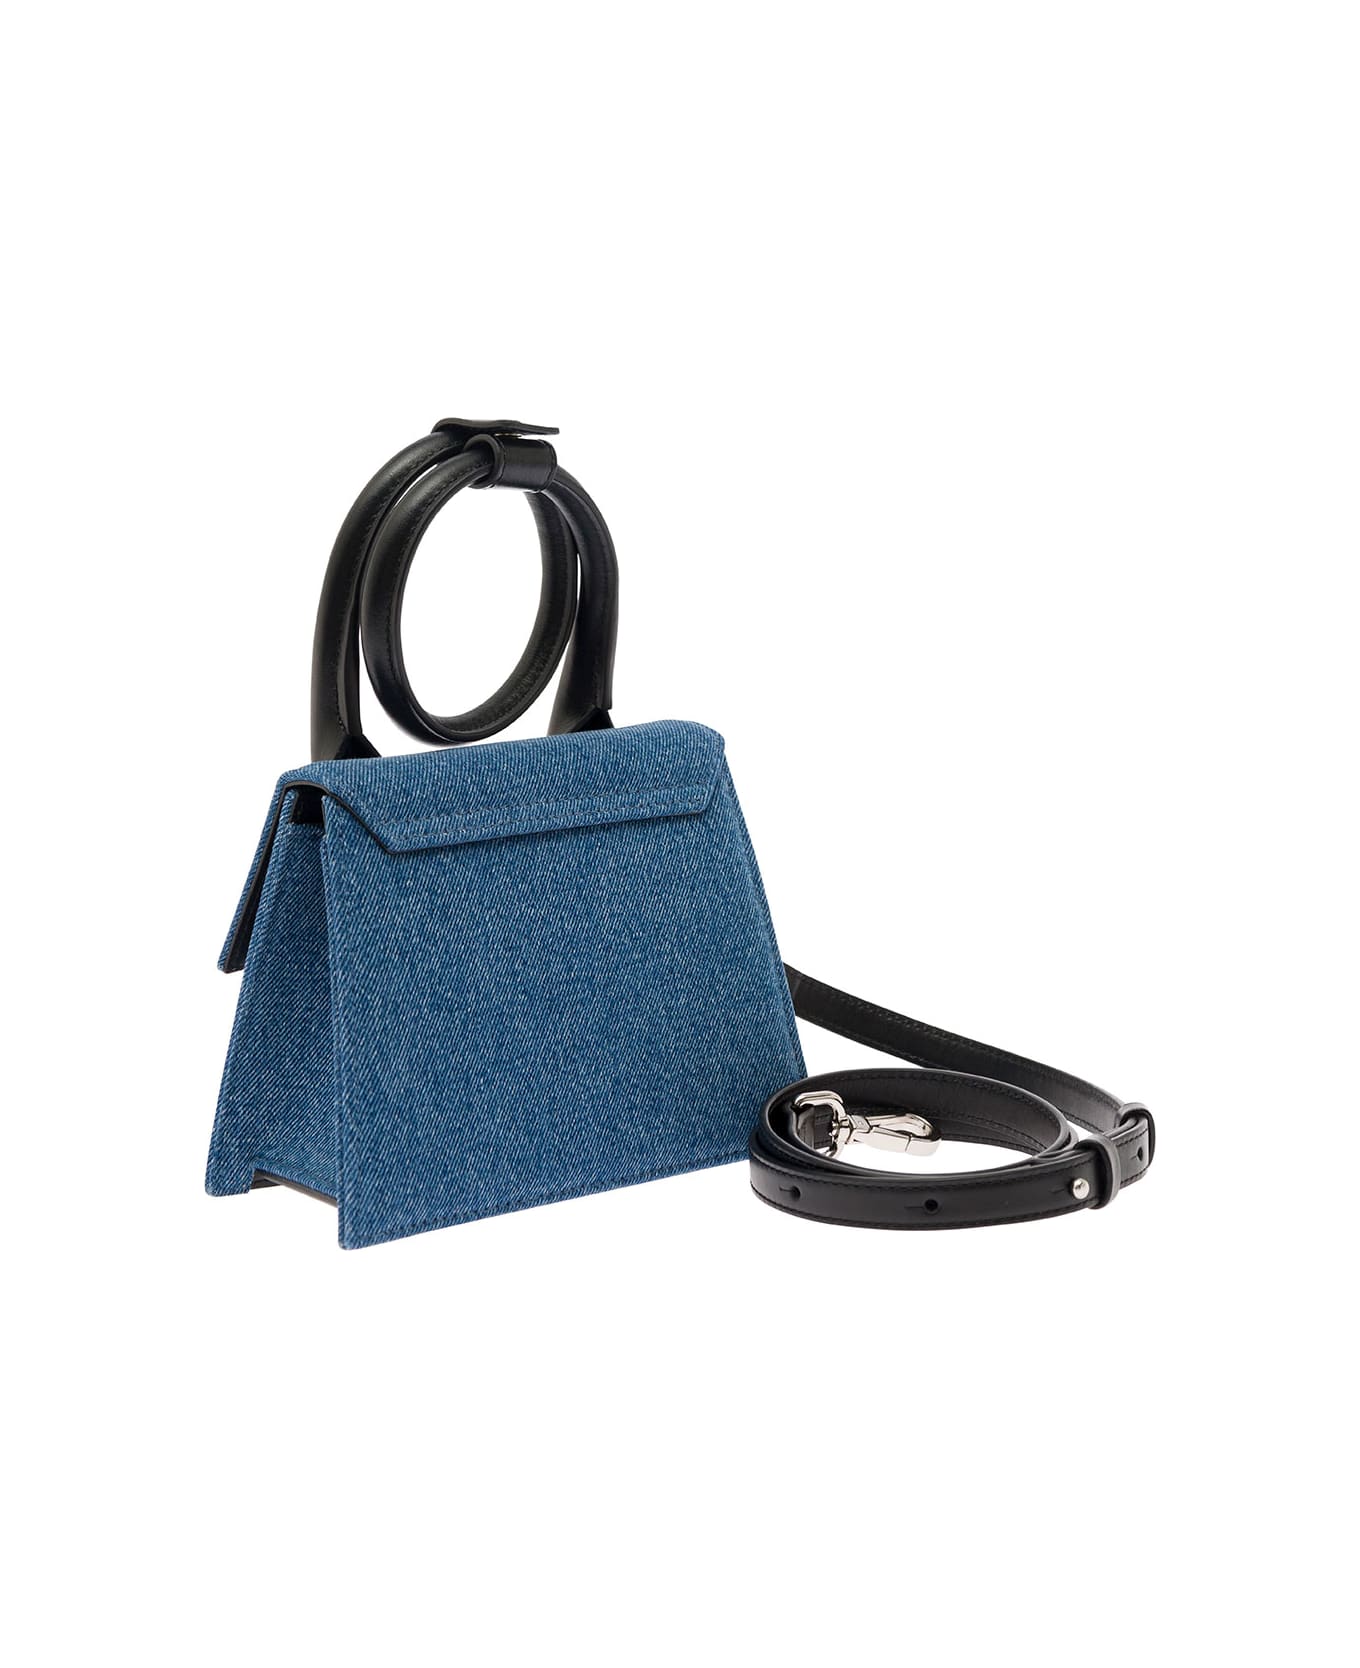 Jacquemus Le Chiquito Noeud Coiled Handbag - Blue